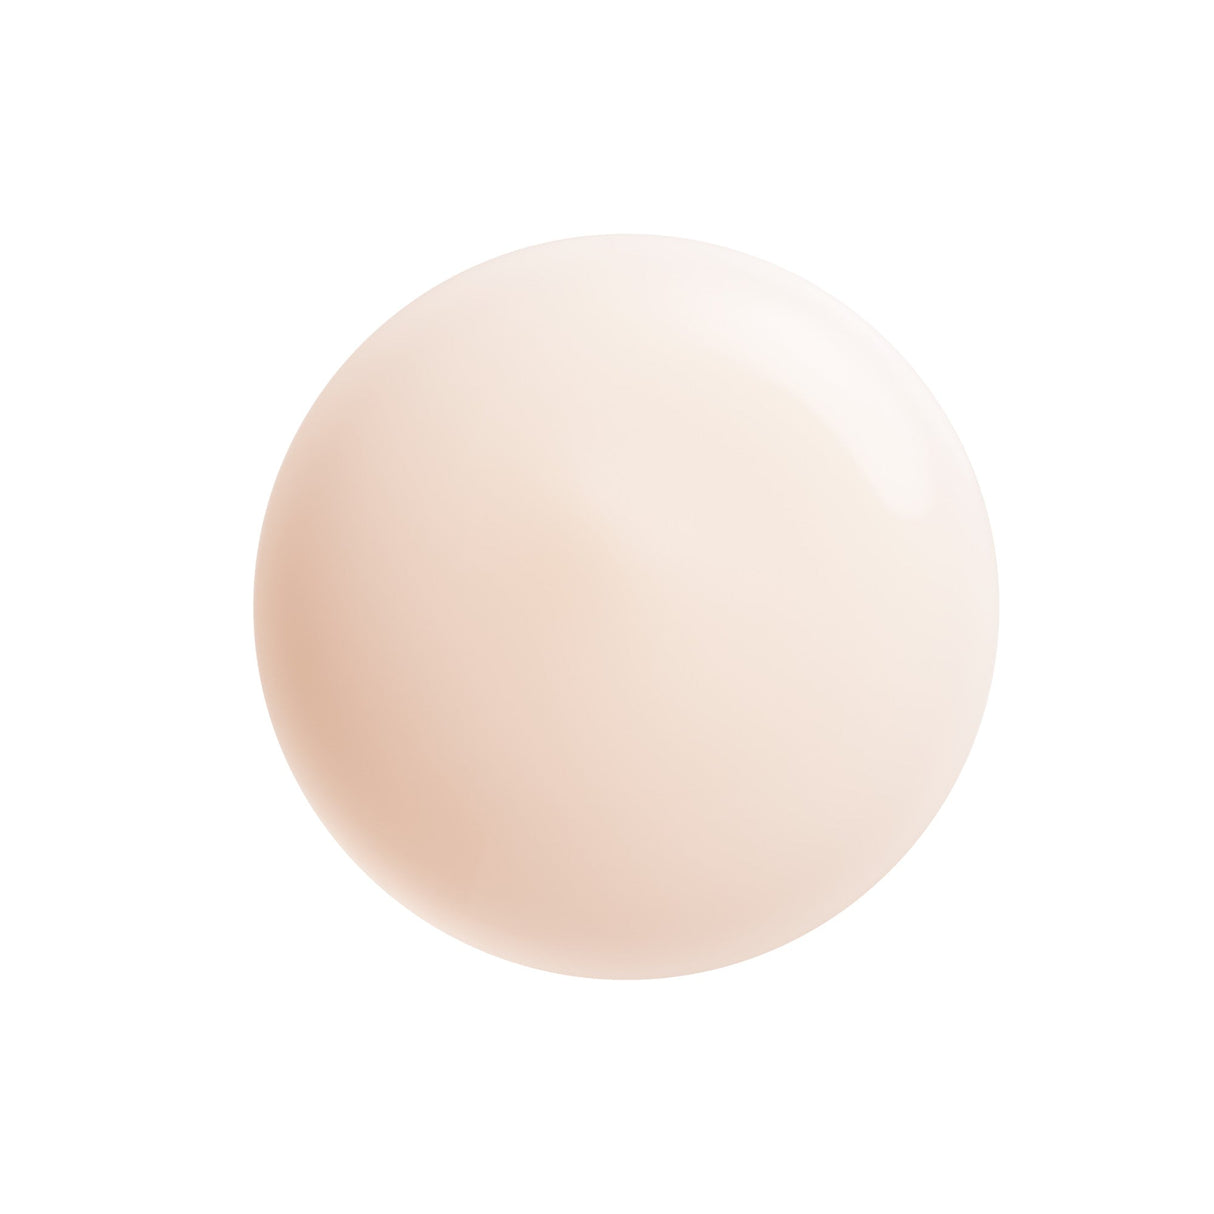 Vital Perfection LiftDefine Radiance Serum-Shiseido